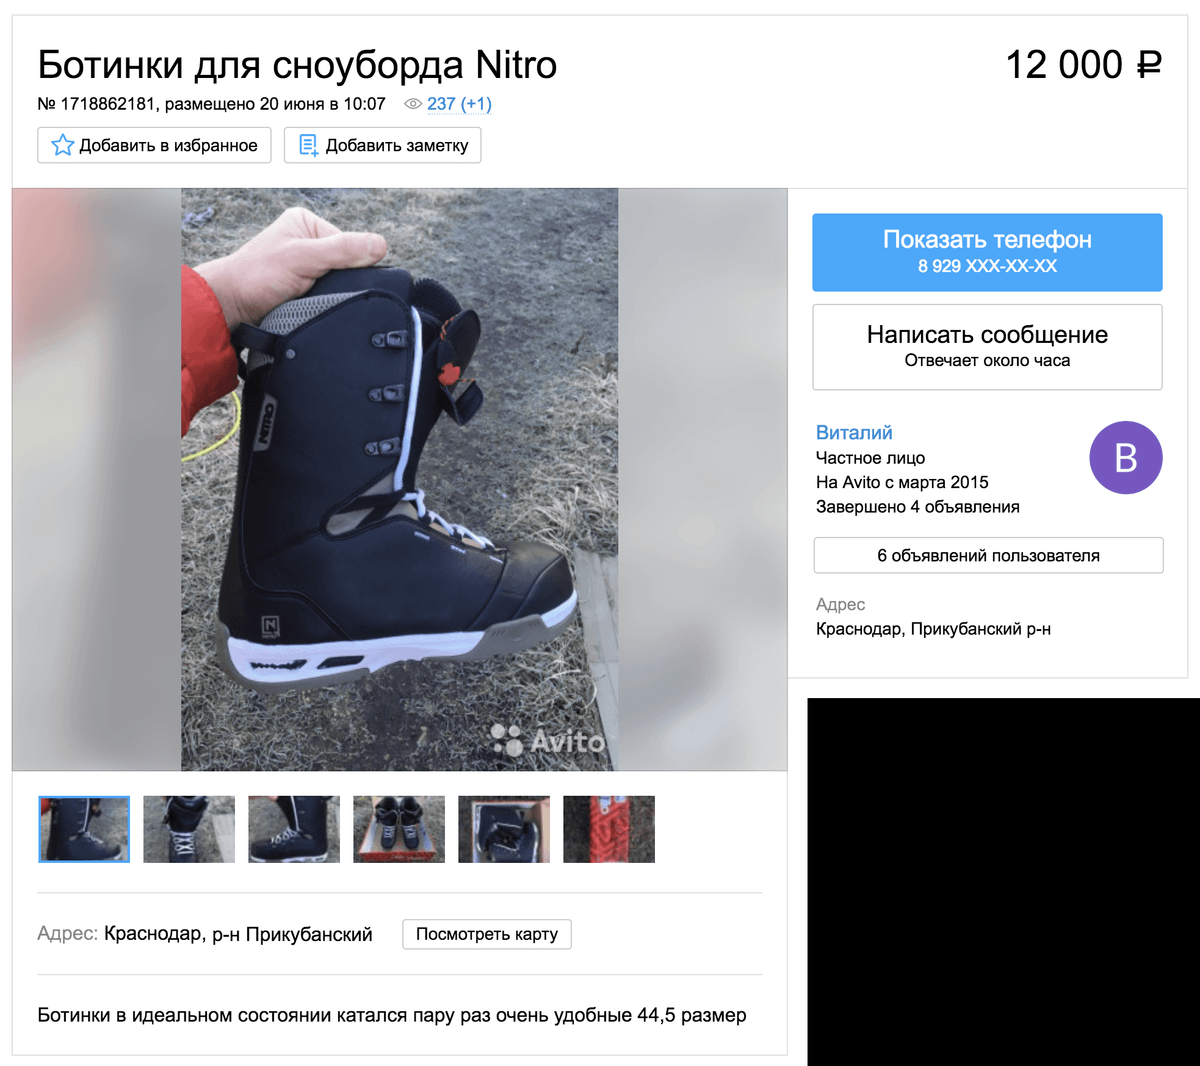 Подержанные ботинки для сноуборда за 12 000 <span class=ruble>Р</span>. Источник: Авито